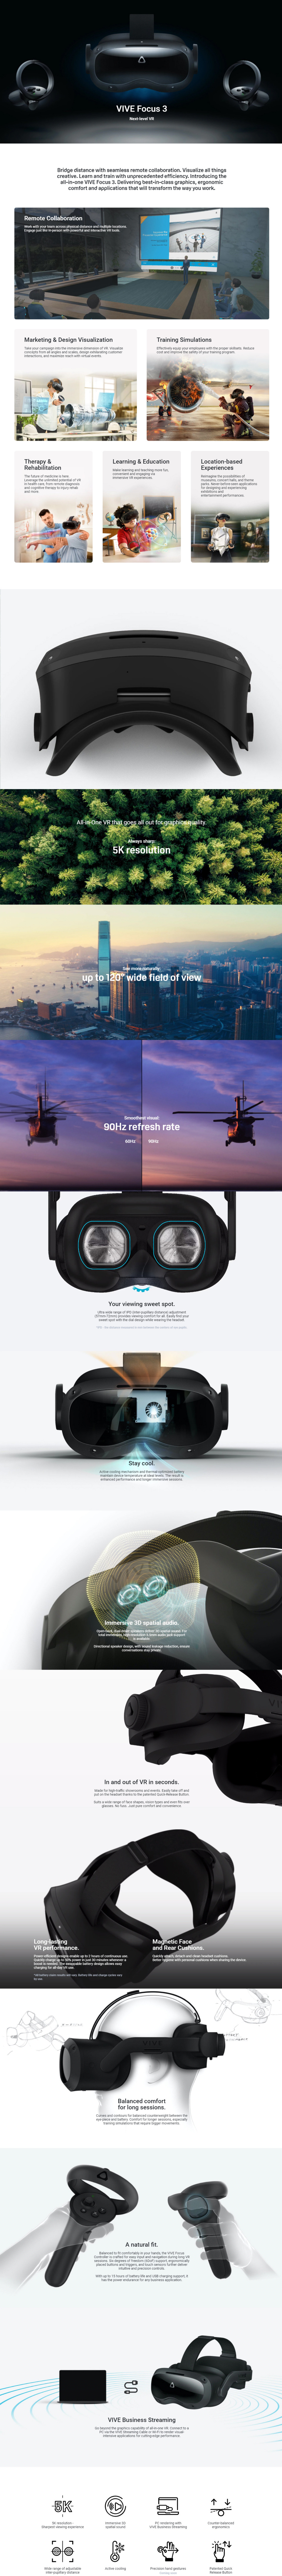 htc vive focus 3 virtual reality headset kit 99hasy007-00